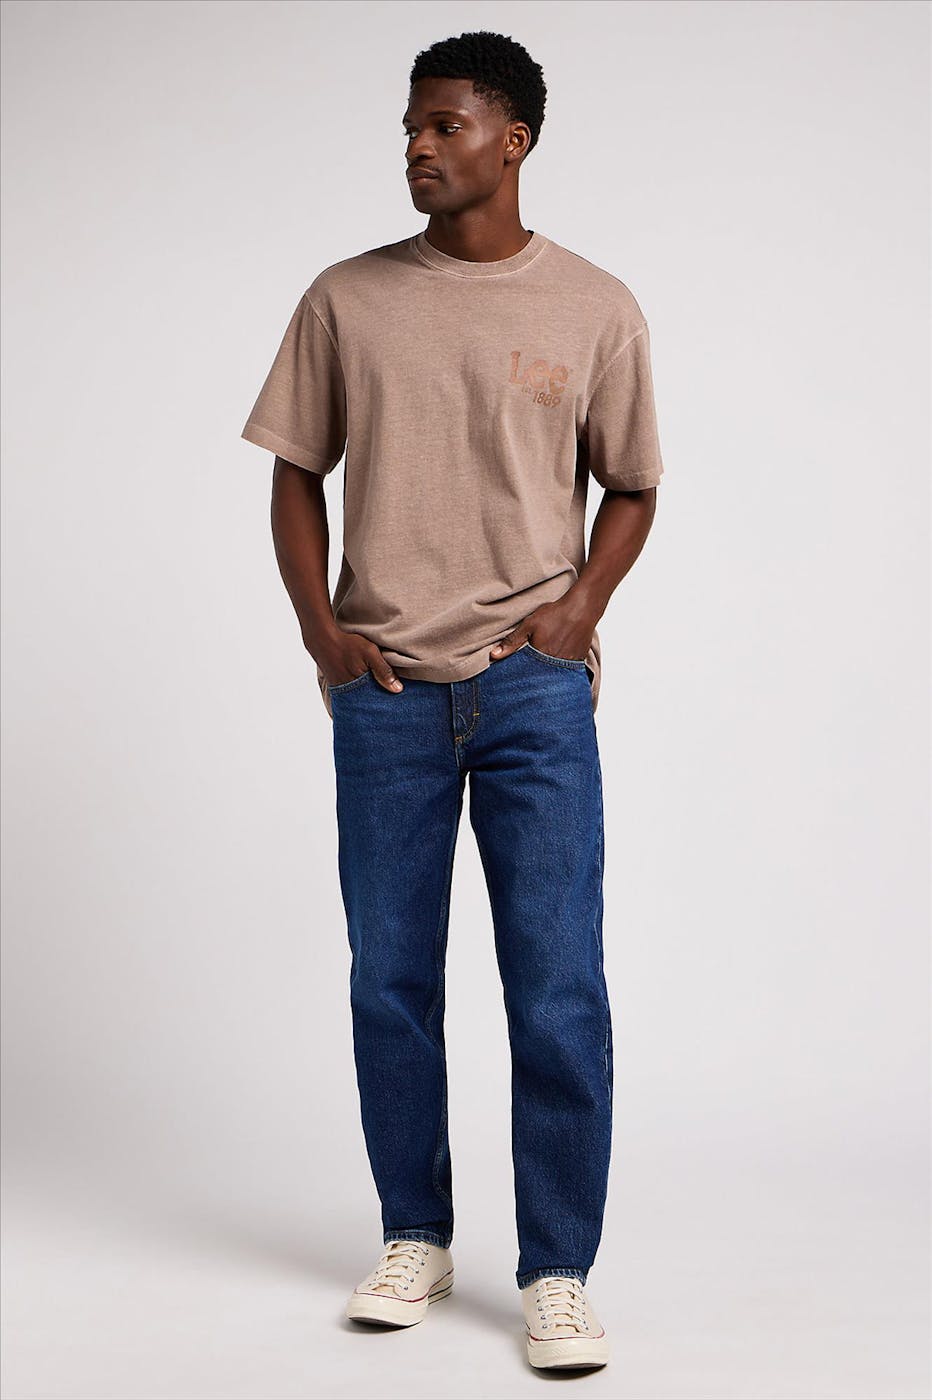 Lee - Donkerblauwe Oscar jeans